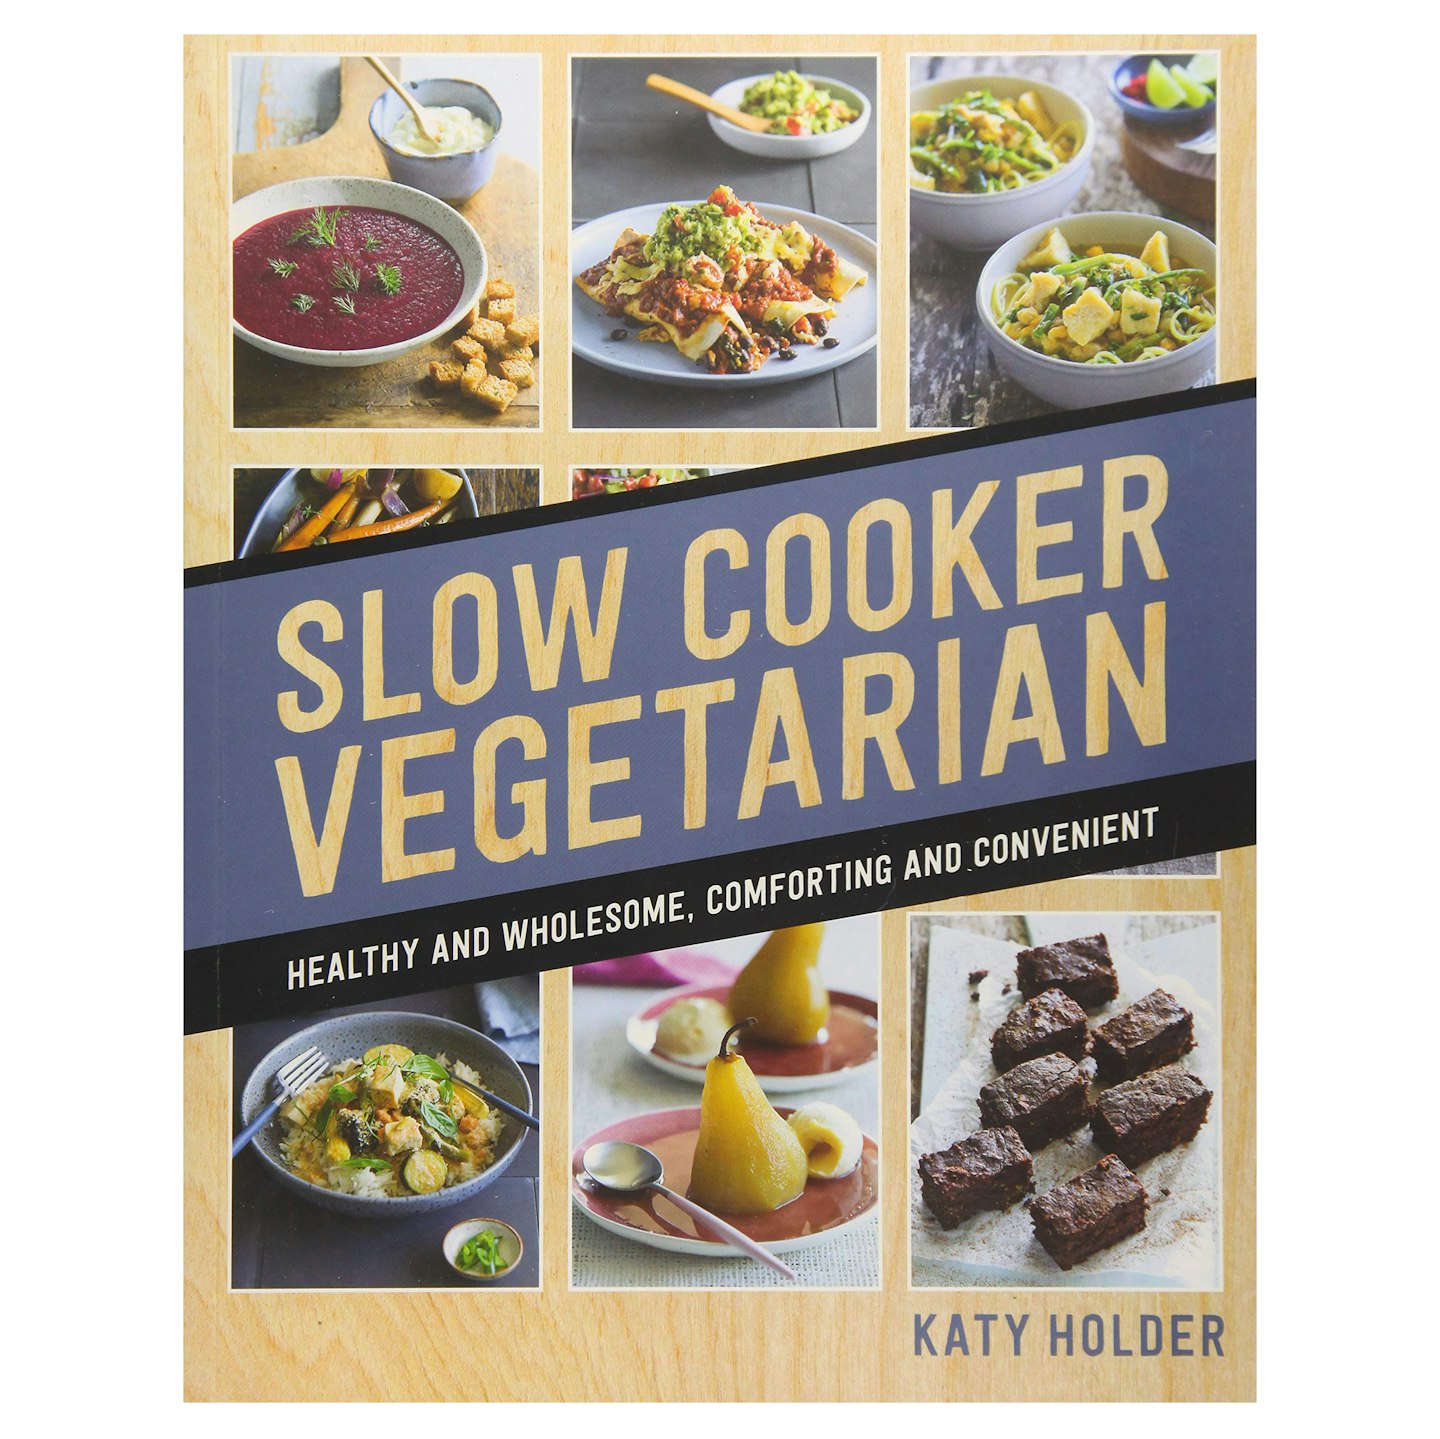 Slow Cooker Vegetarian by Katy Holder